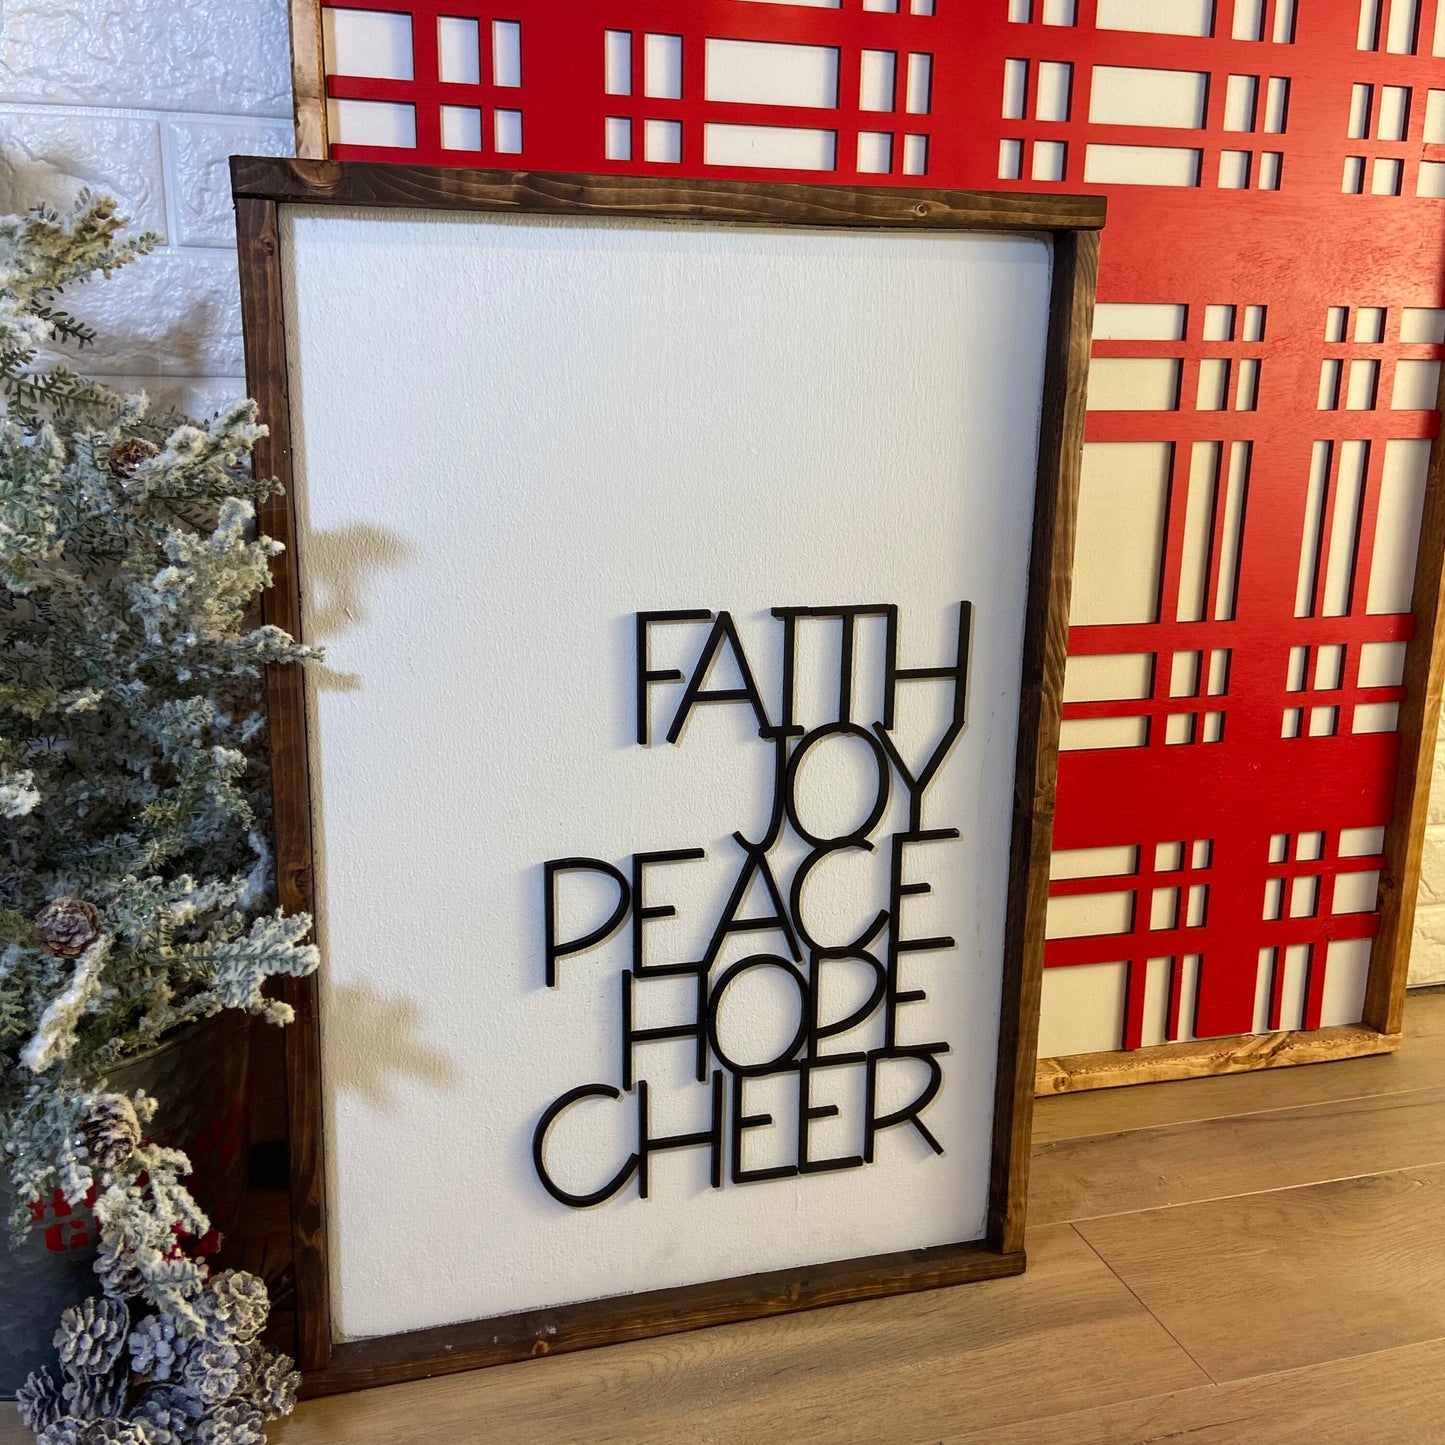 faith joy peace hope cheer - Christmas wood sign, mantle decor [FREE SHIPPING!]